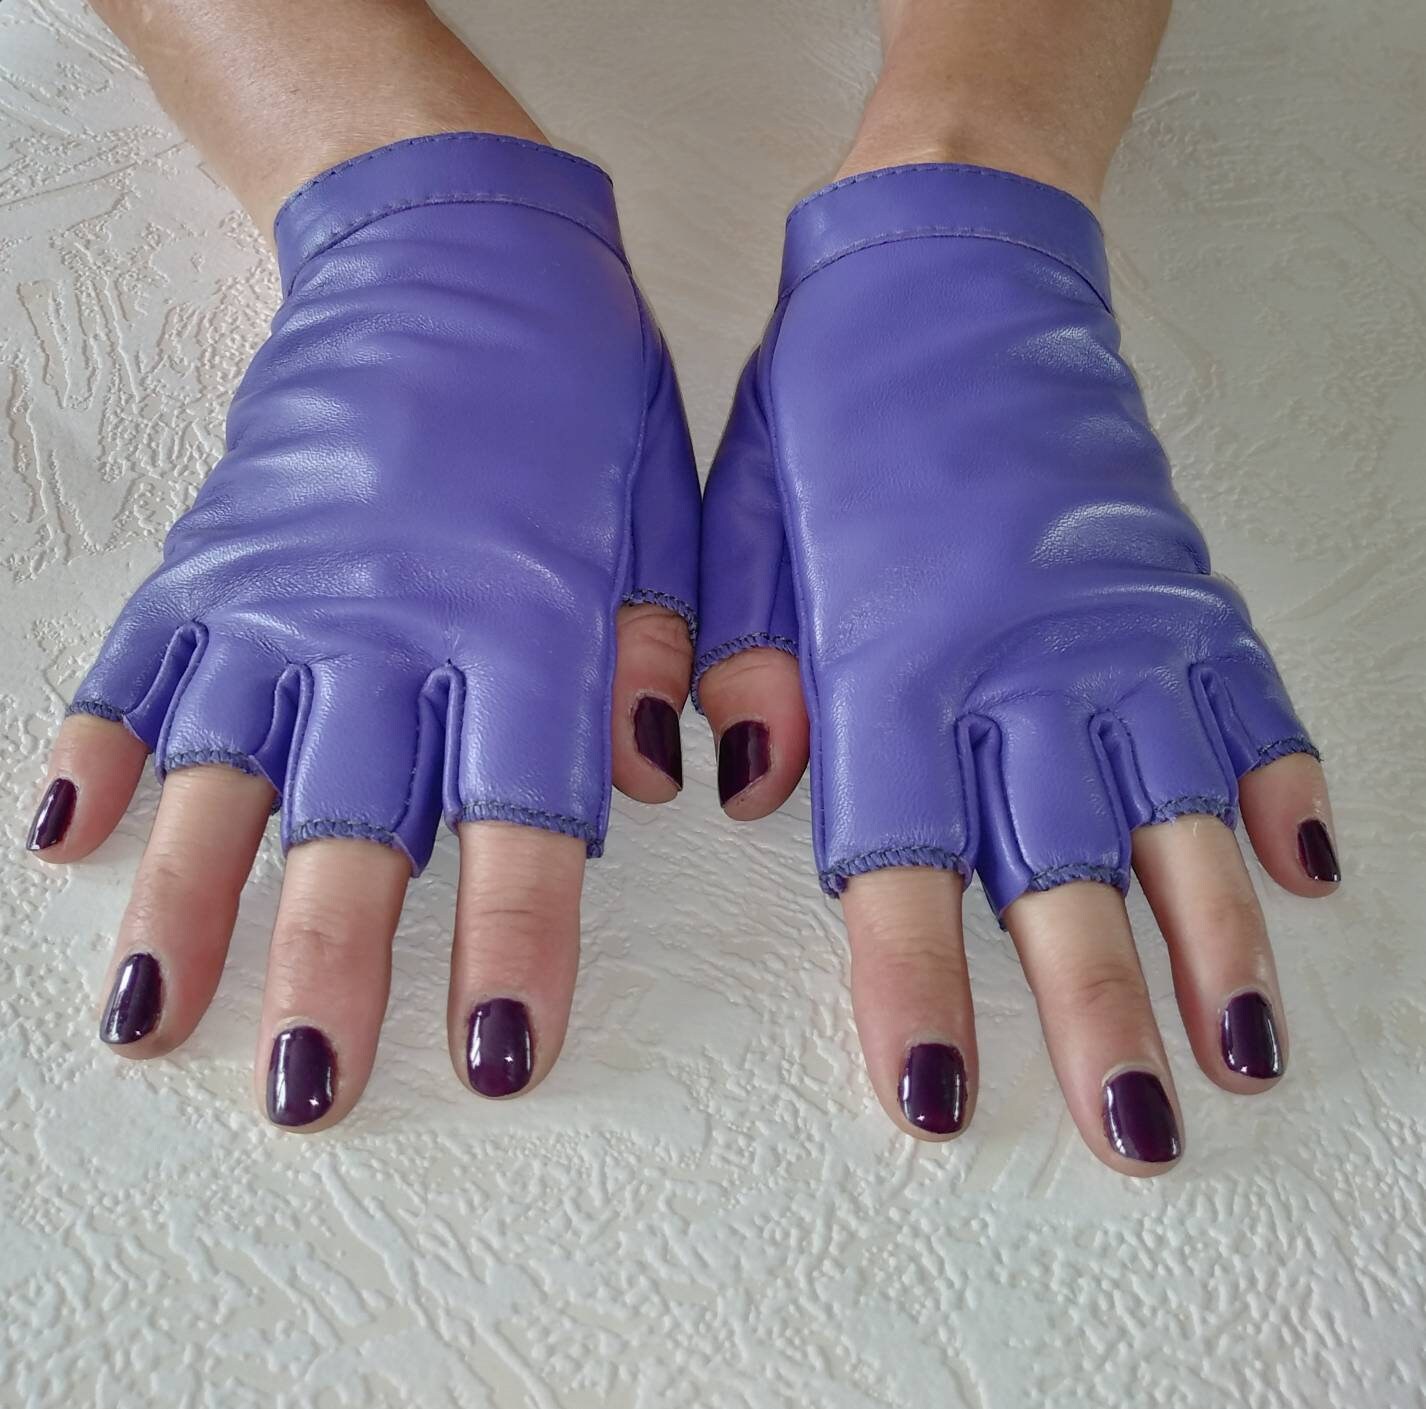  aoozleny Women Girls Fingerless Gloves,PU Leather